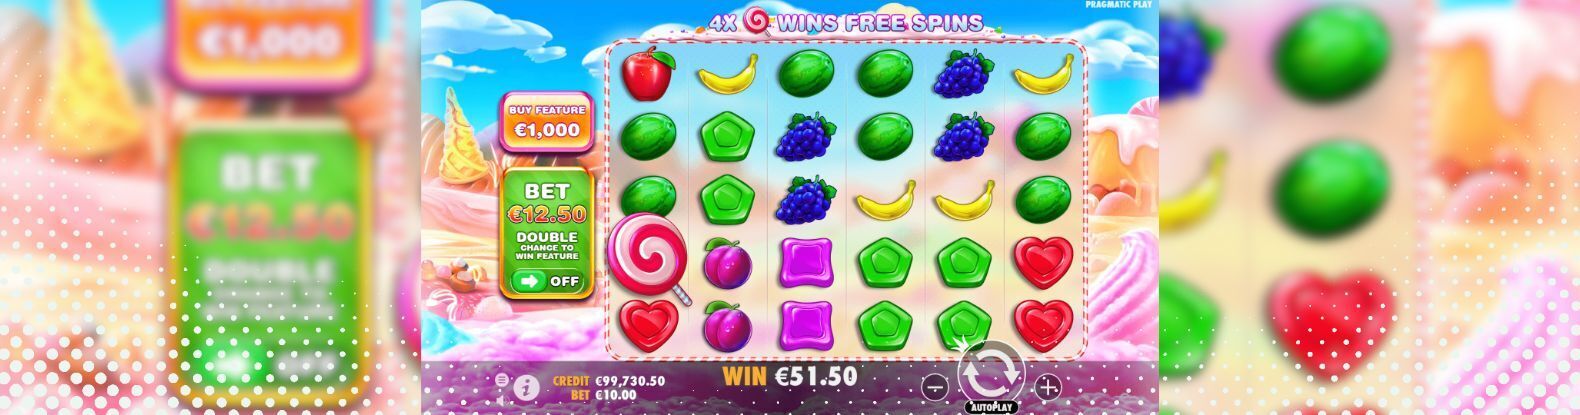 This is a screenshot of Sweet Bonanza Pokies Game by Pragmatic Play